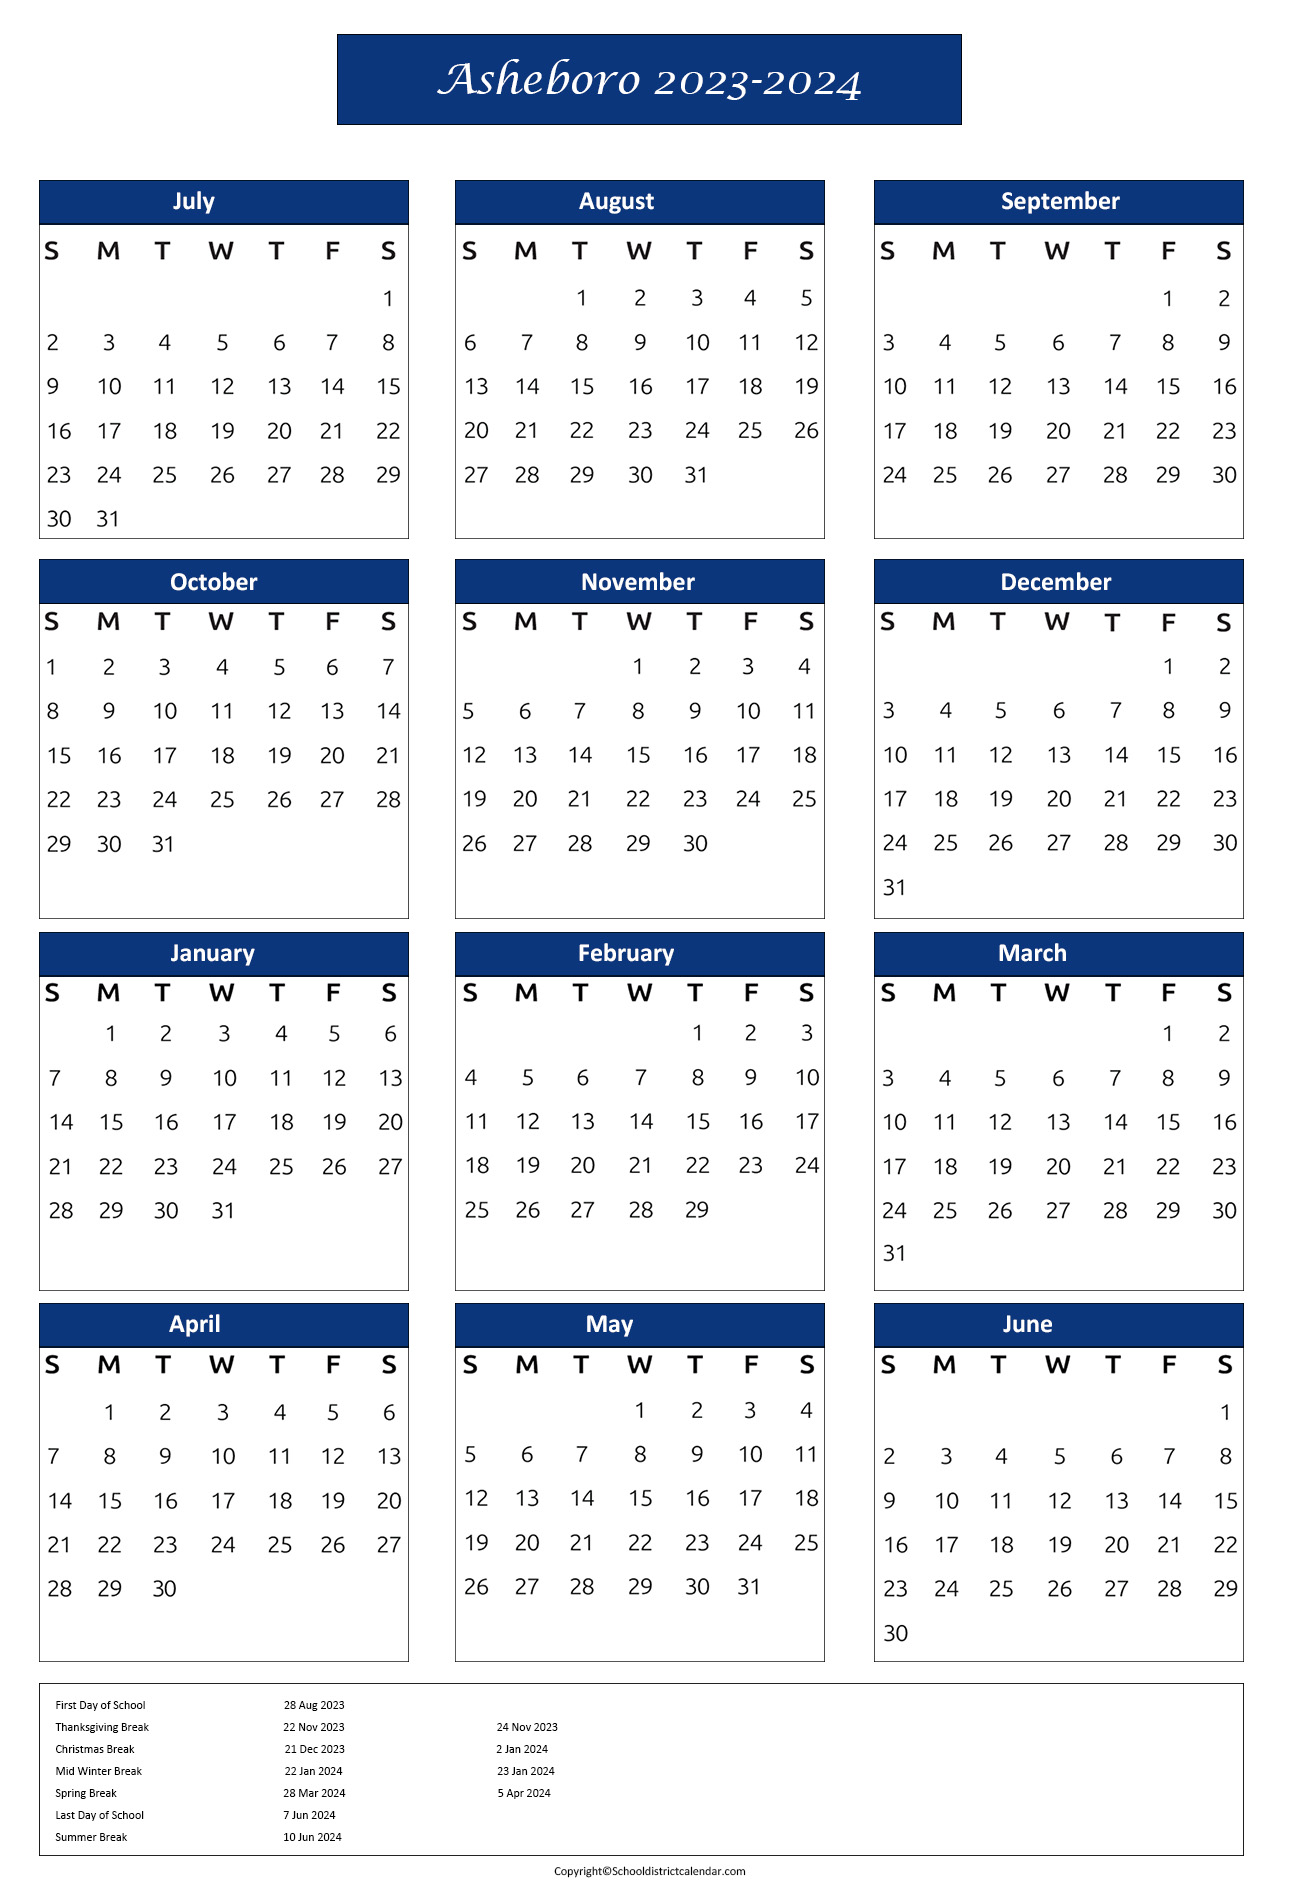 Asheboro City Schools Calendar Holidays 20232024